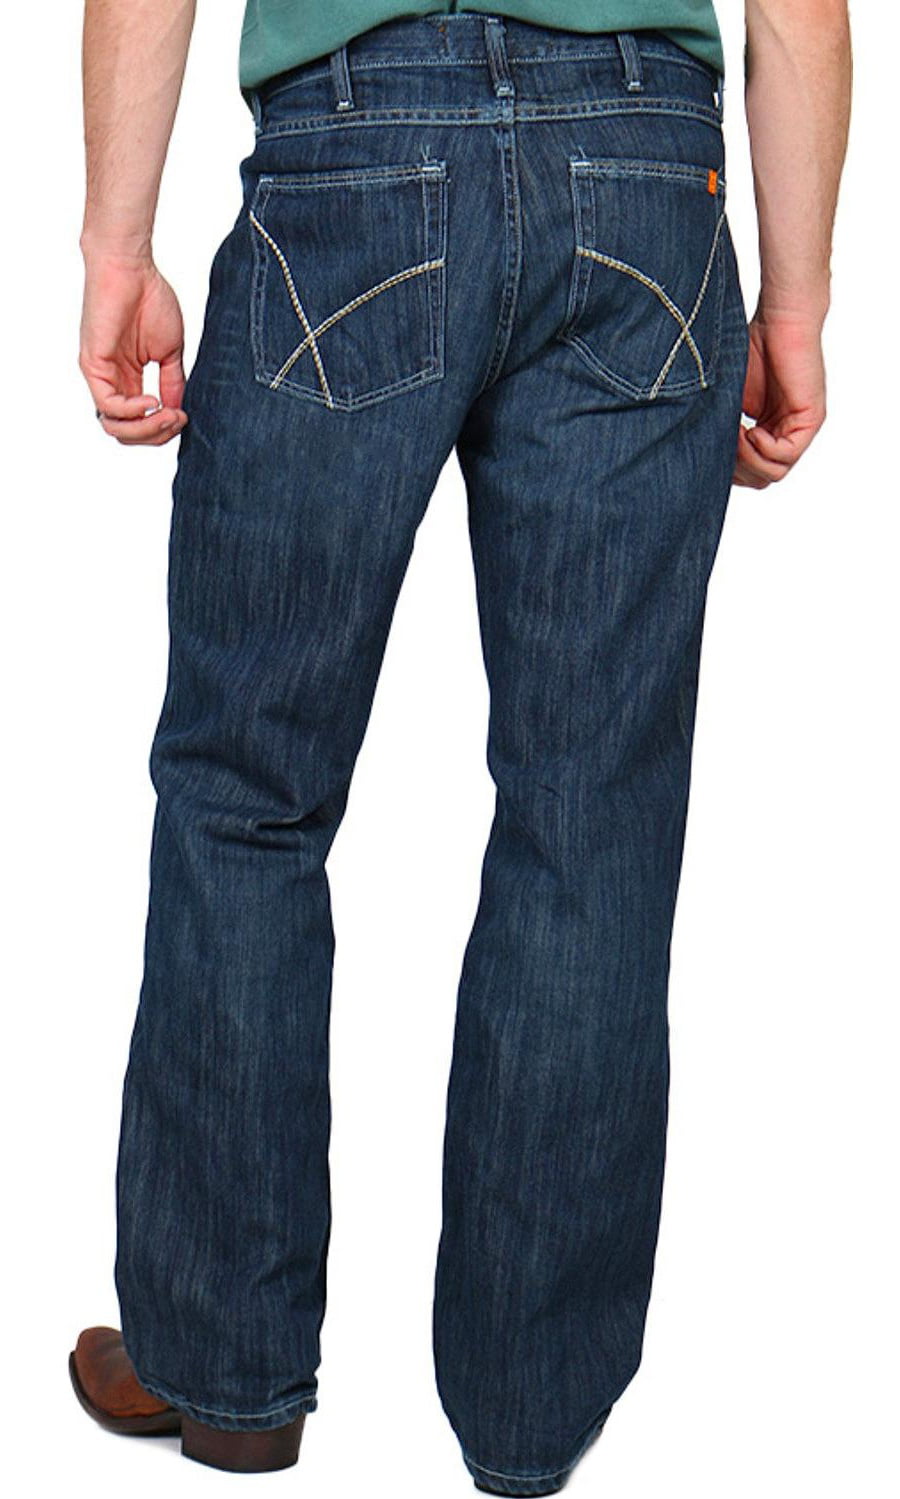 wrangler work jeans walmart